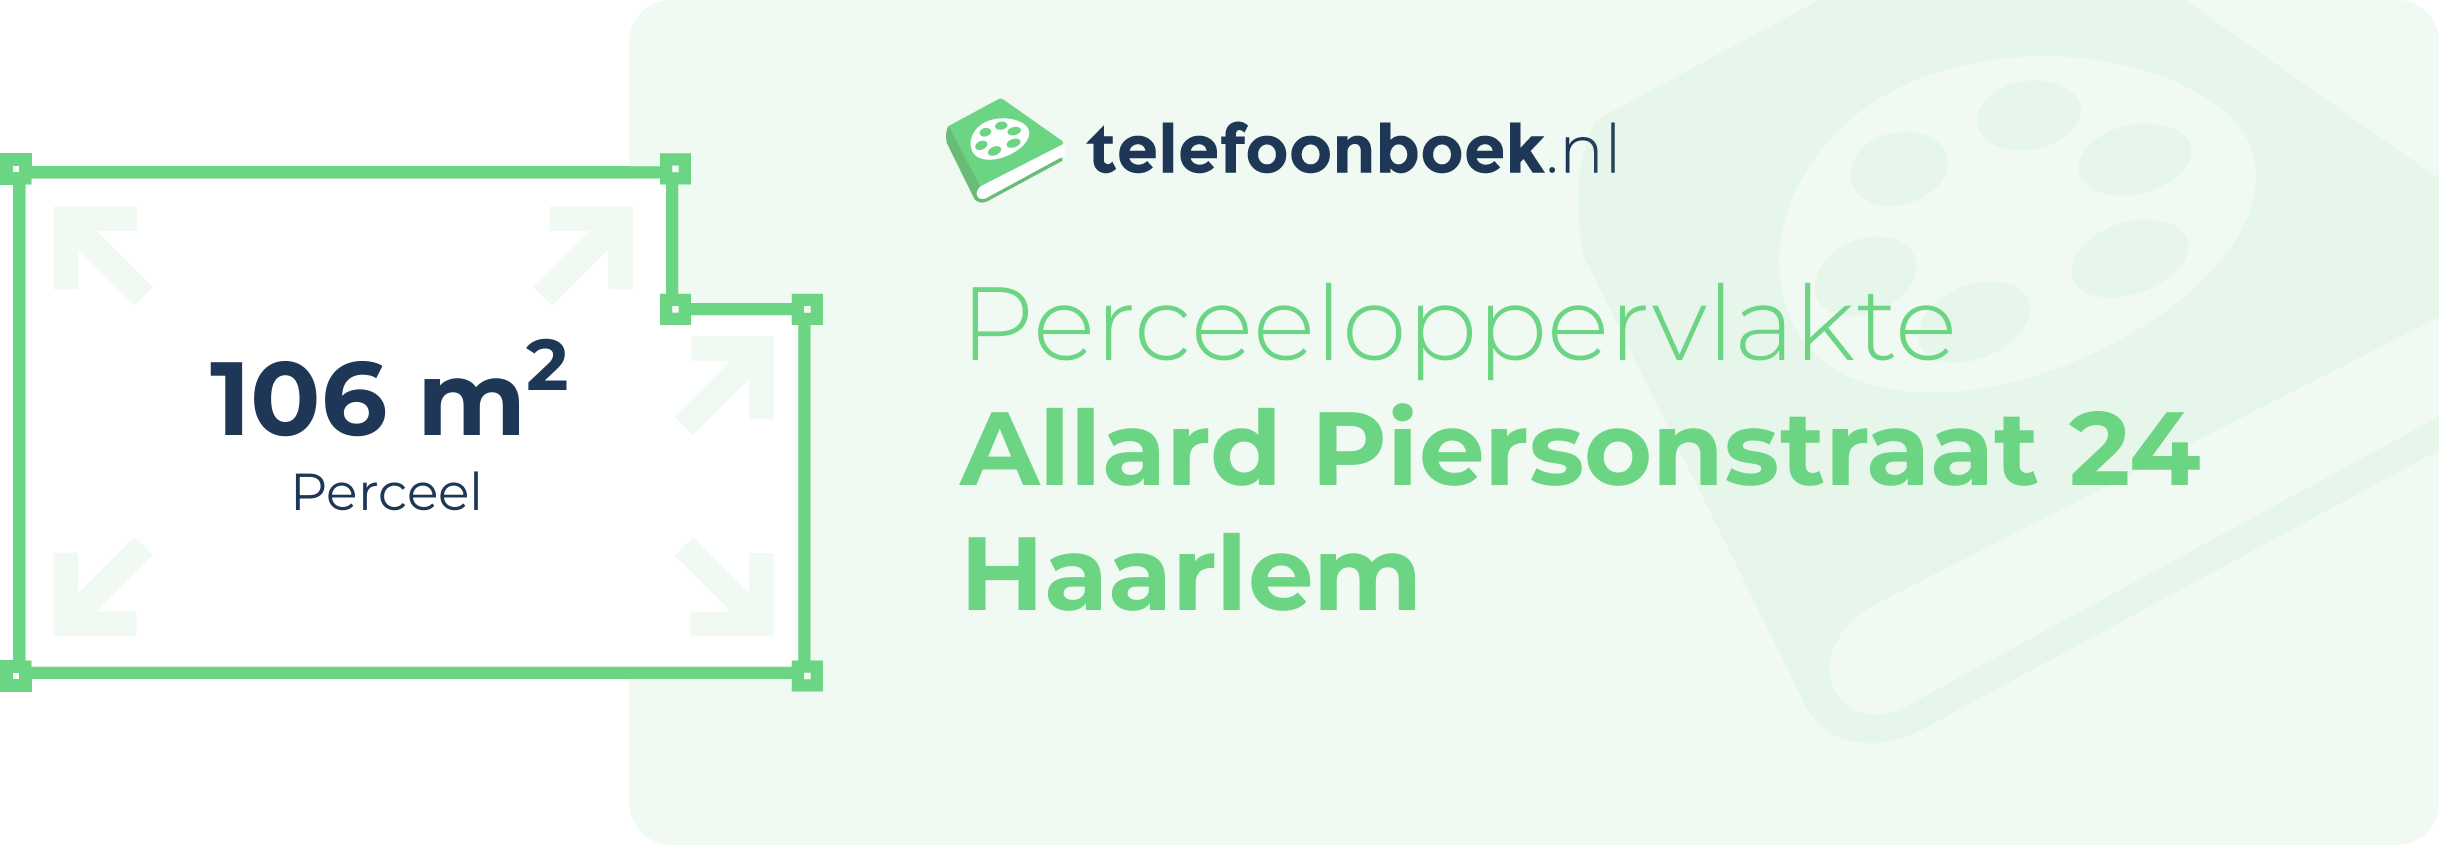 Perceeloppervlakte Allard Piersonstraat 24 Haarlem